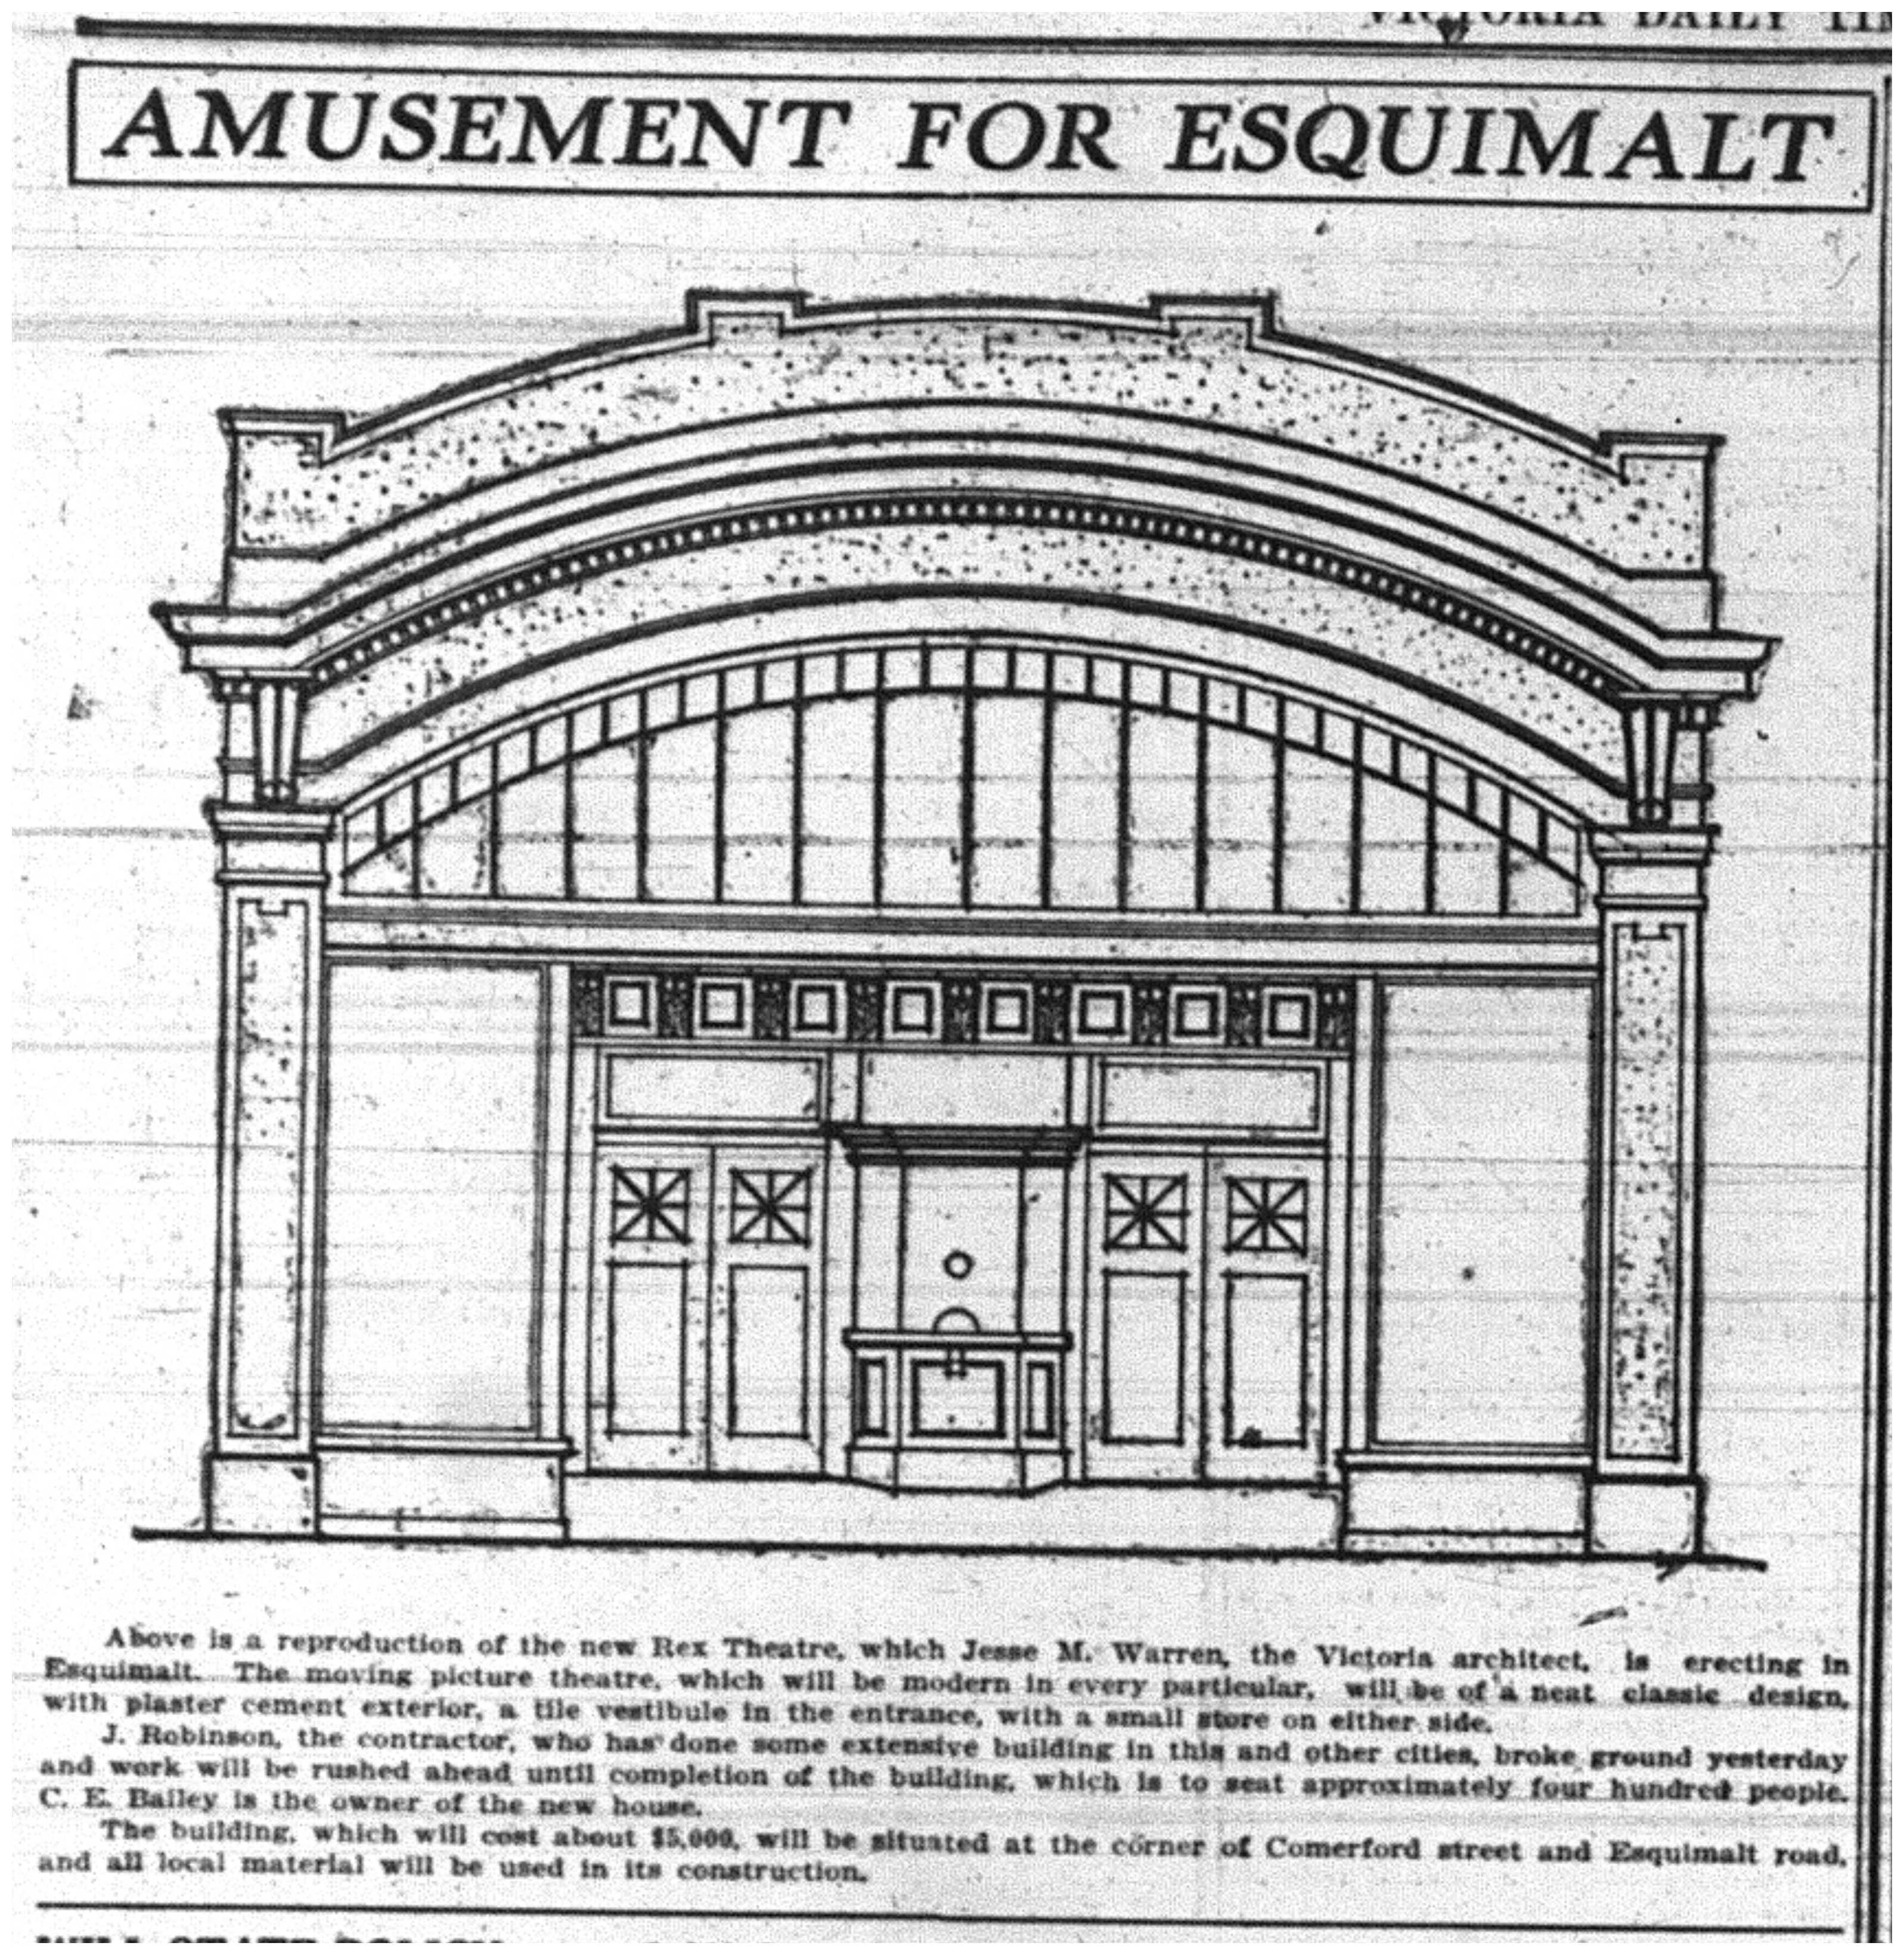 "Amusement for Esquimalt"